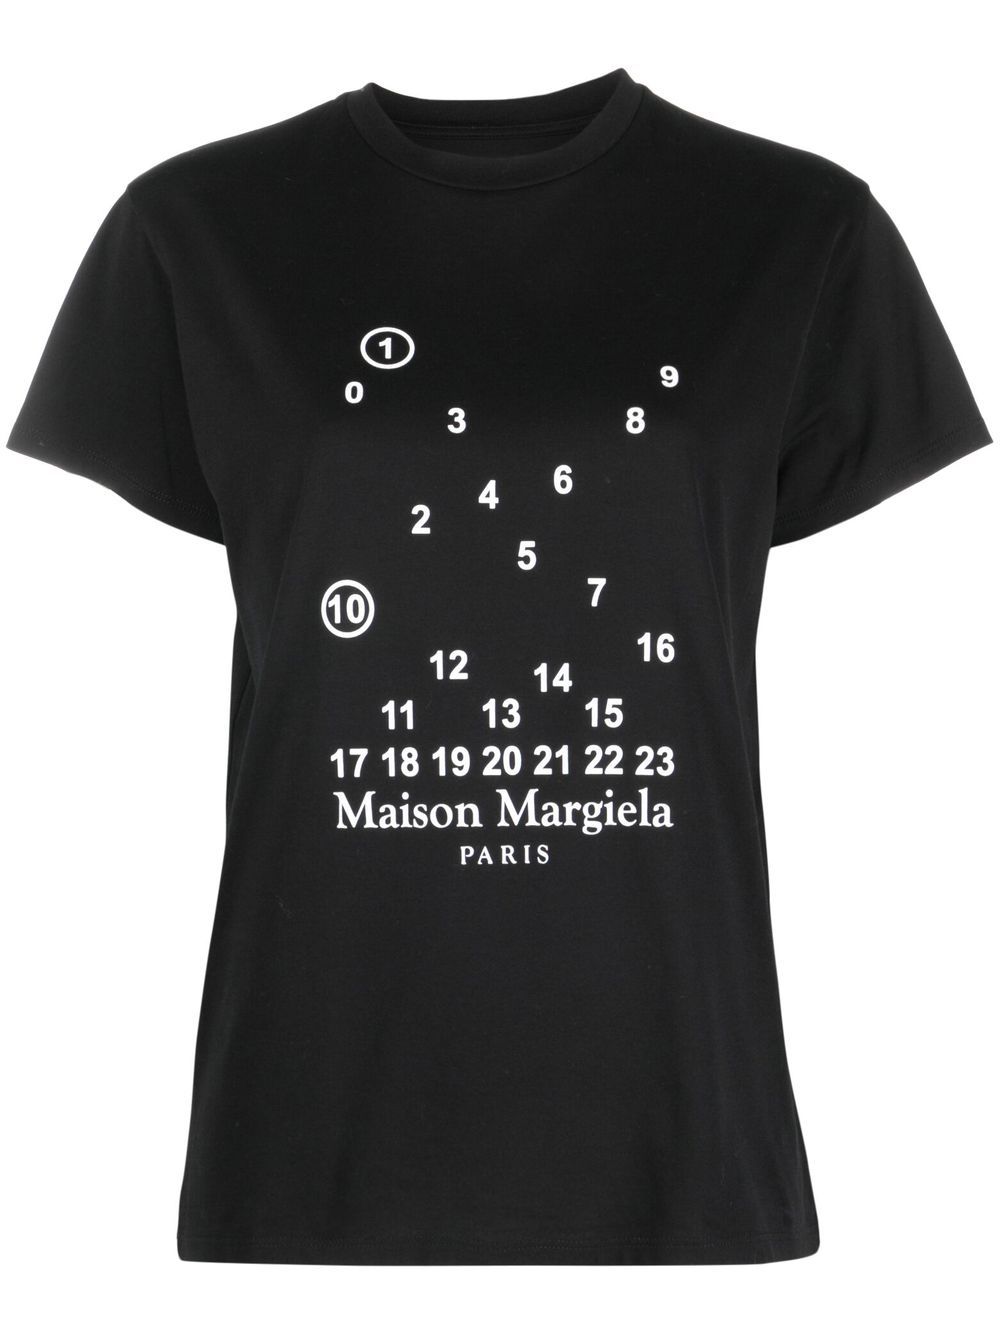 Maison Margiela ナンバーモチーフ Tシャツ - Farfetch